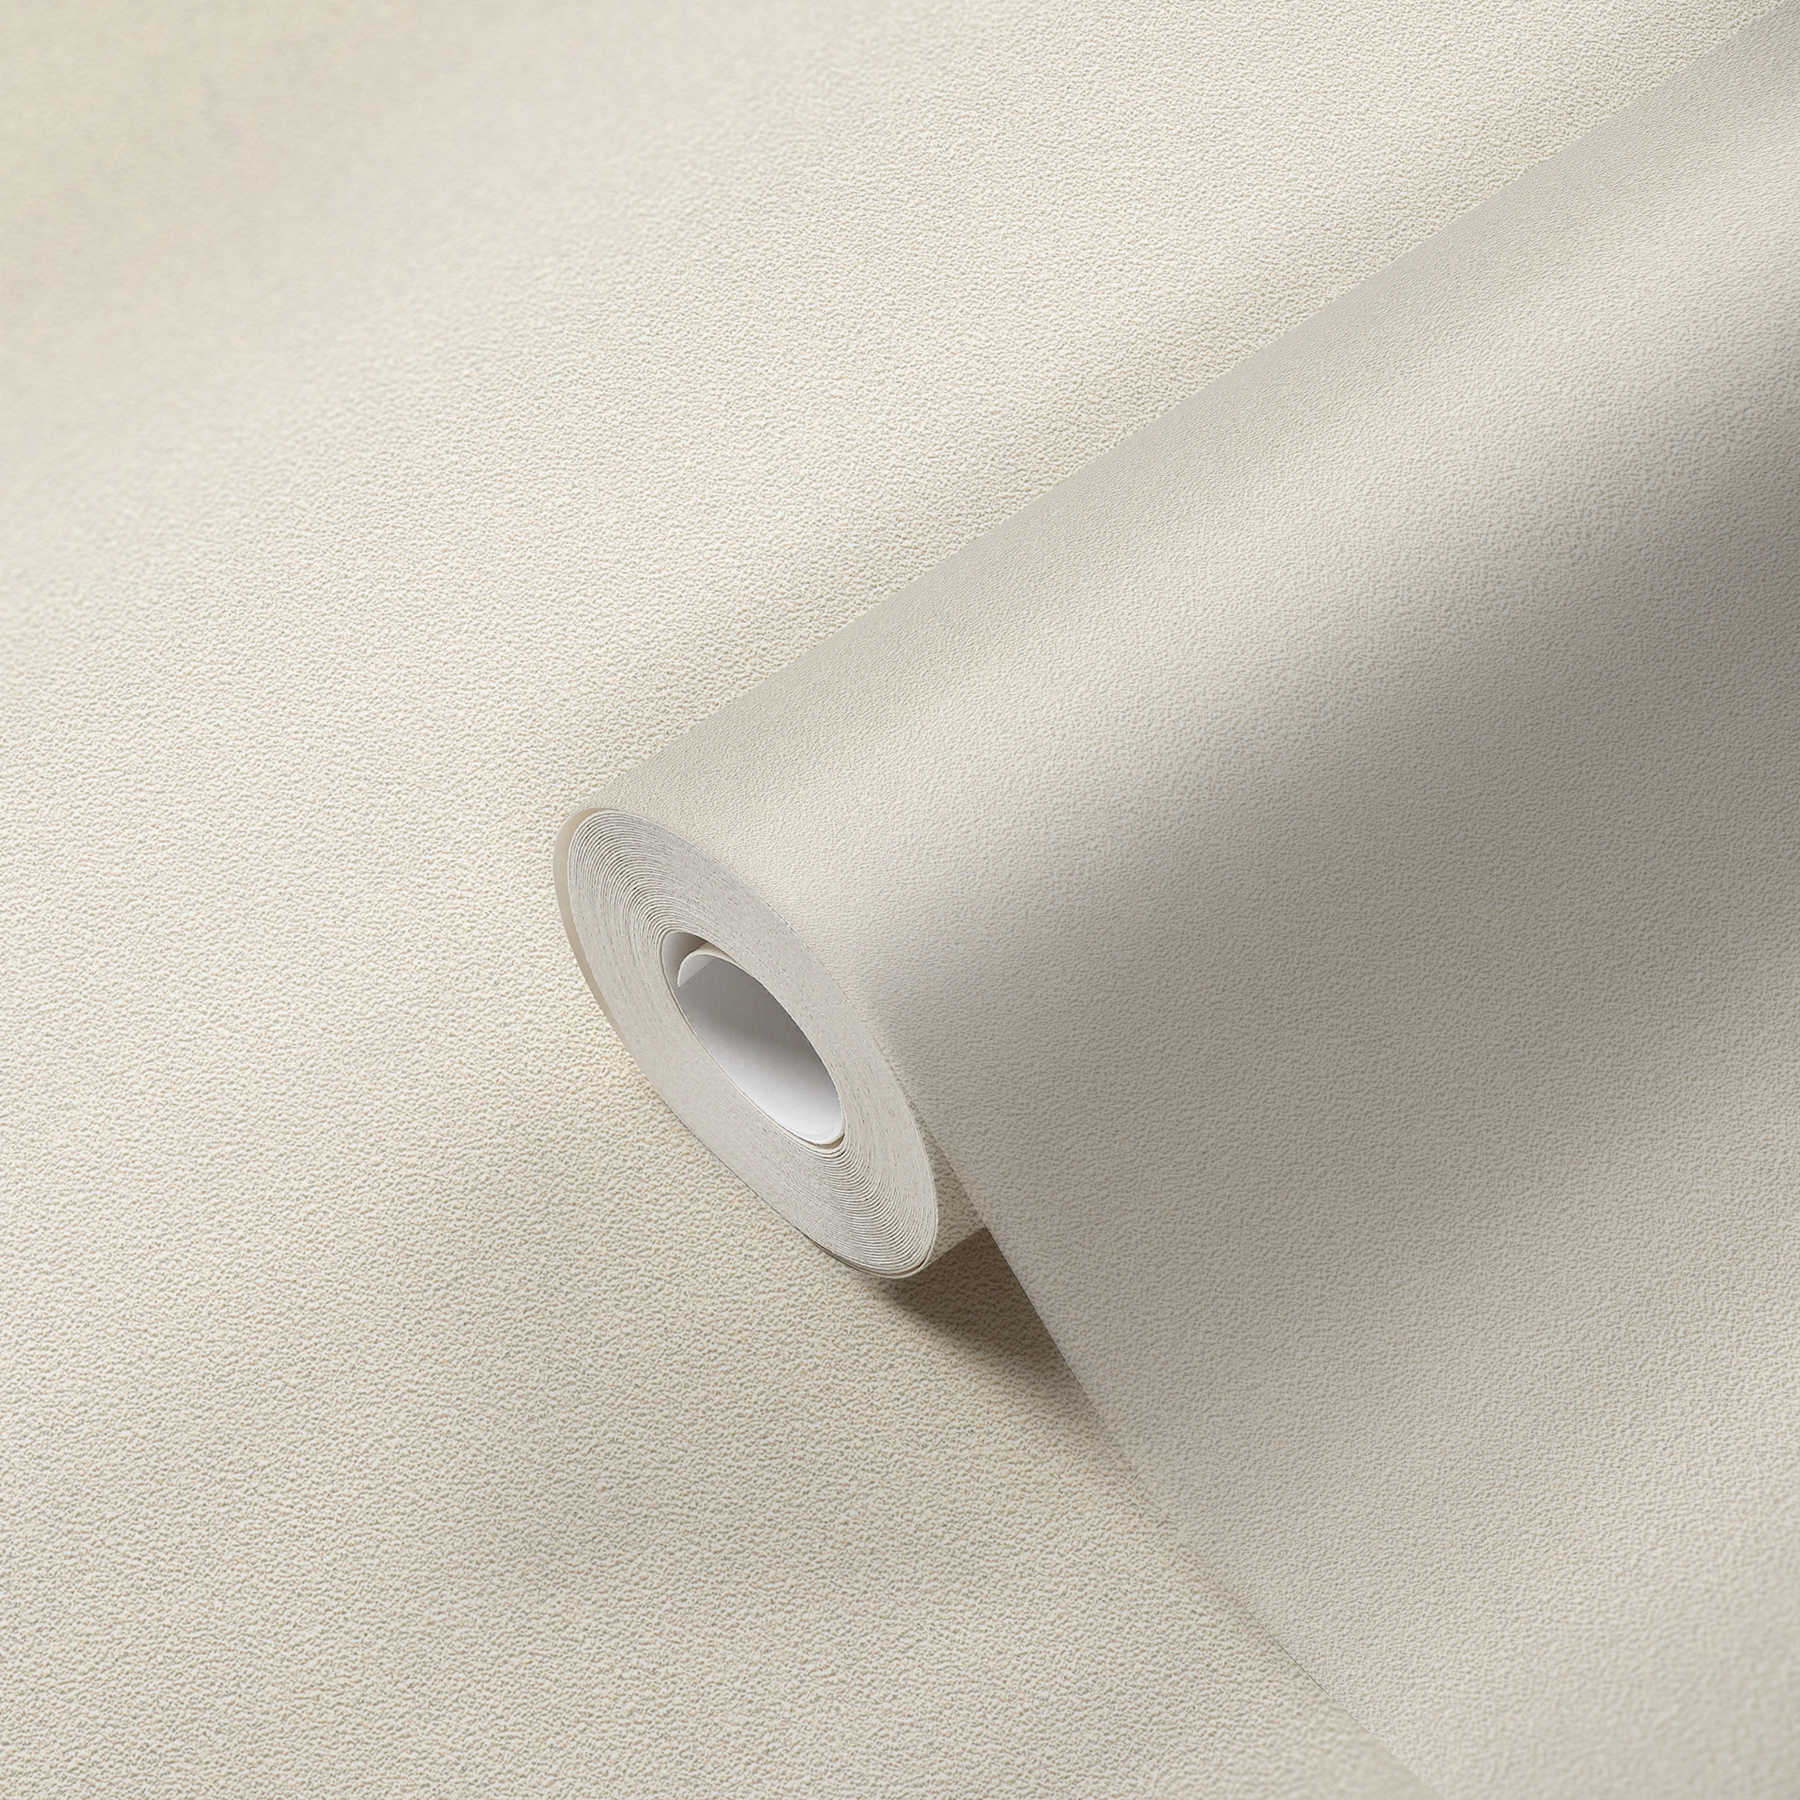             Plain wallpaper natural colour and texture pattern - beige, cream
        